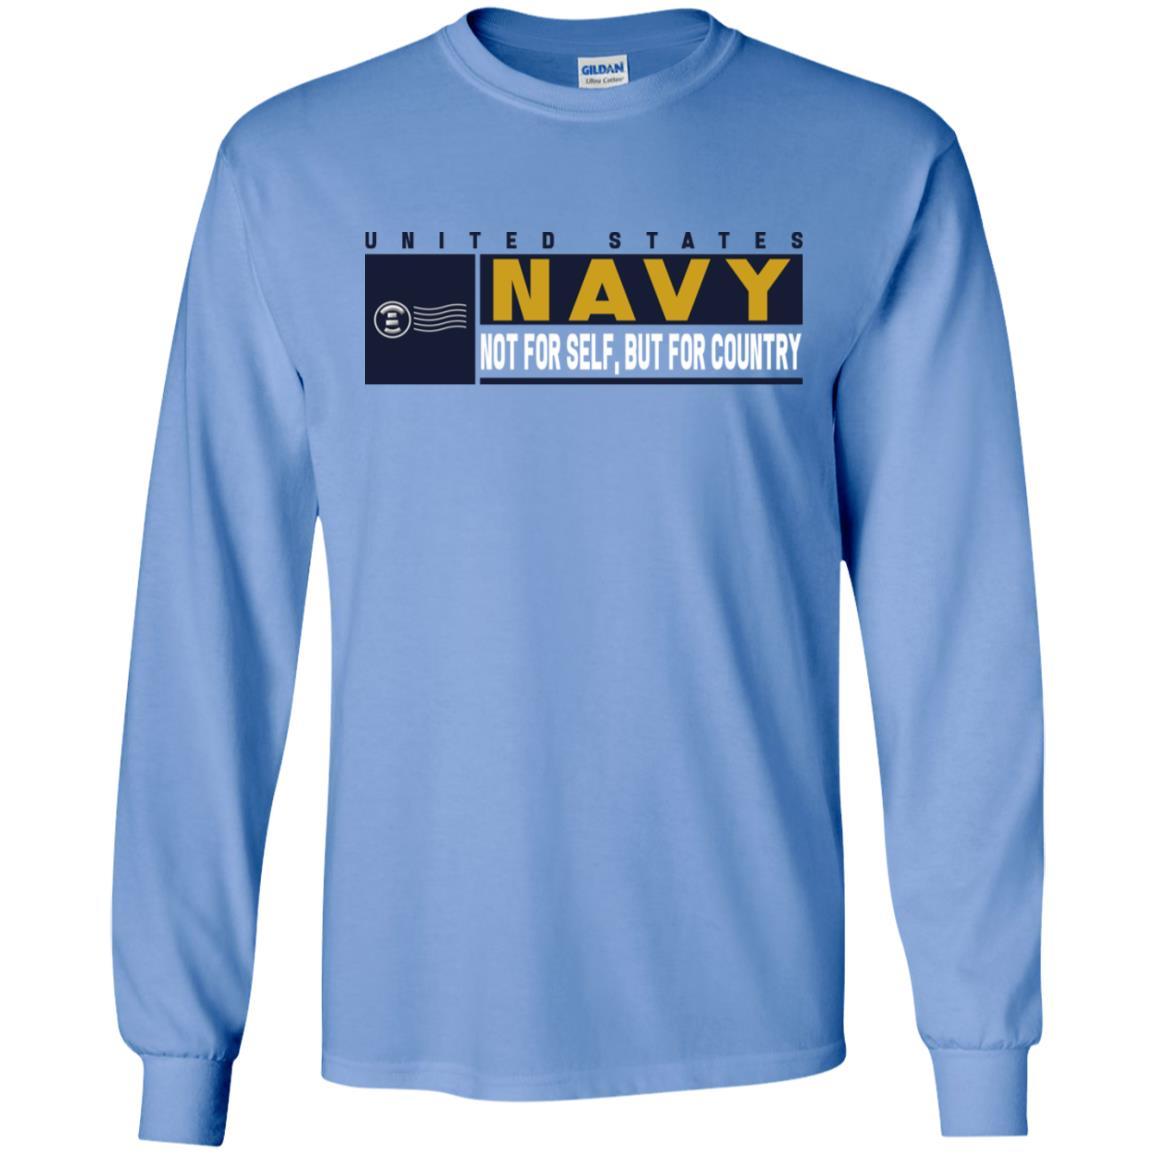 Navy Postal Clerk Navy PC- Not for self Long Sleeve - Pullover Hoodie-TShirt-Navy-Veterans Nation